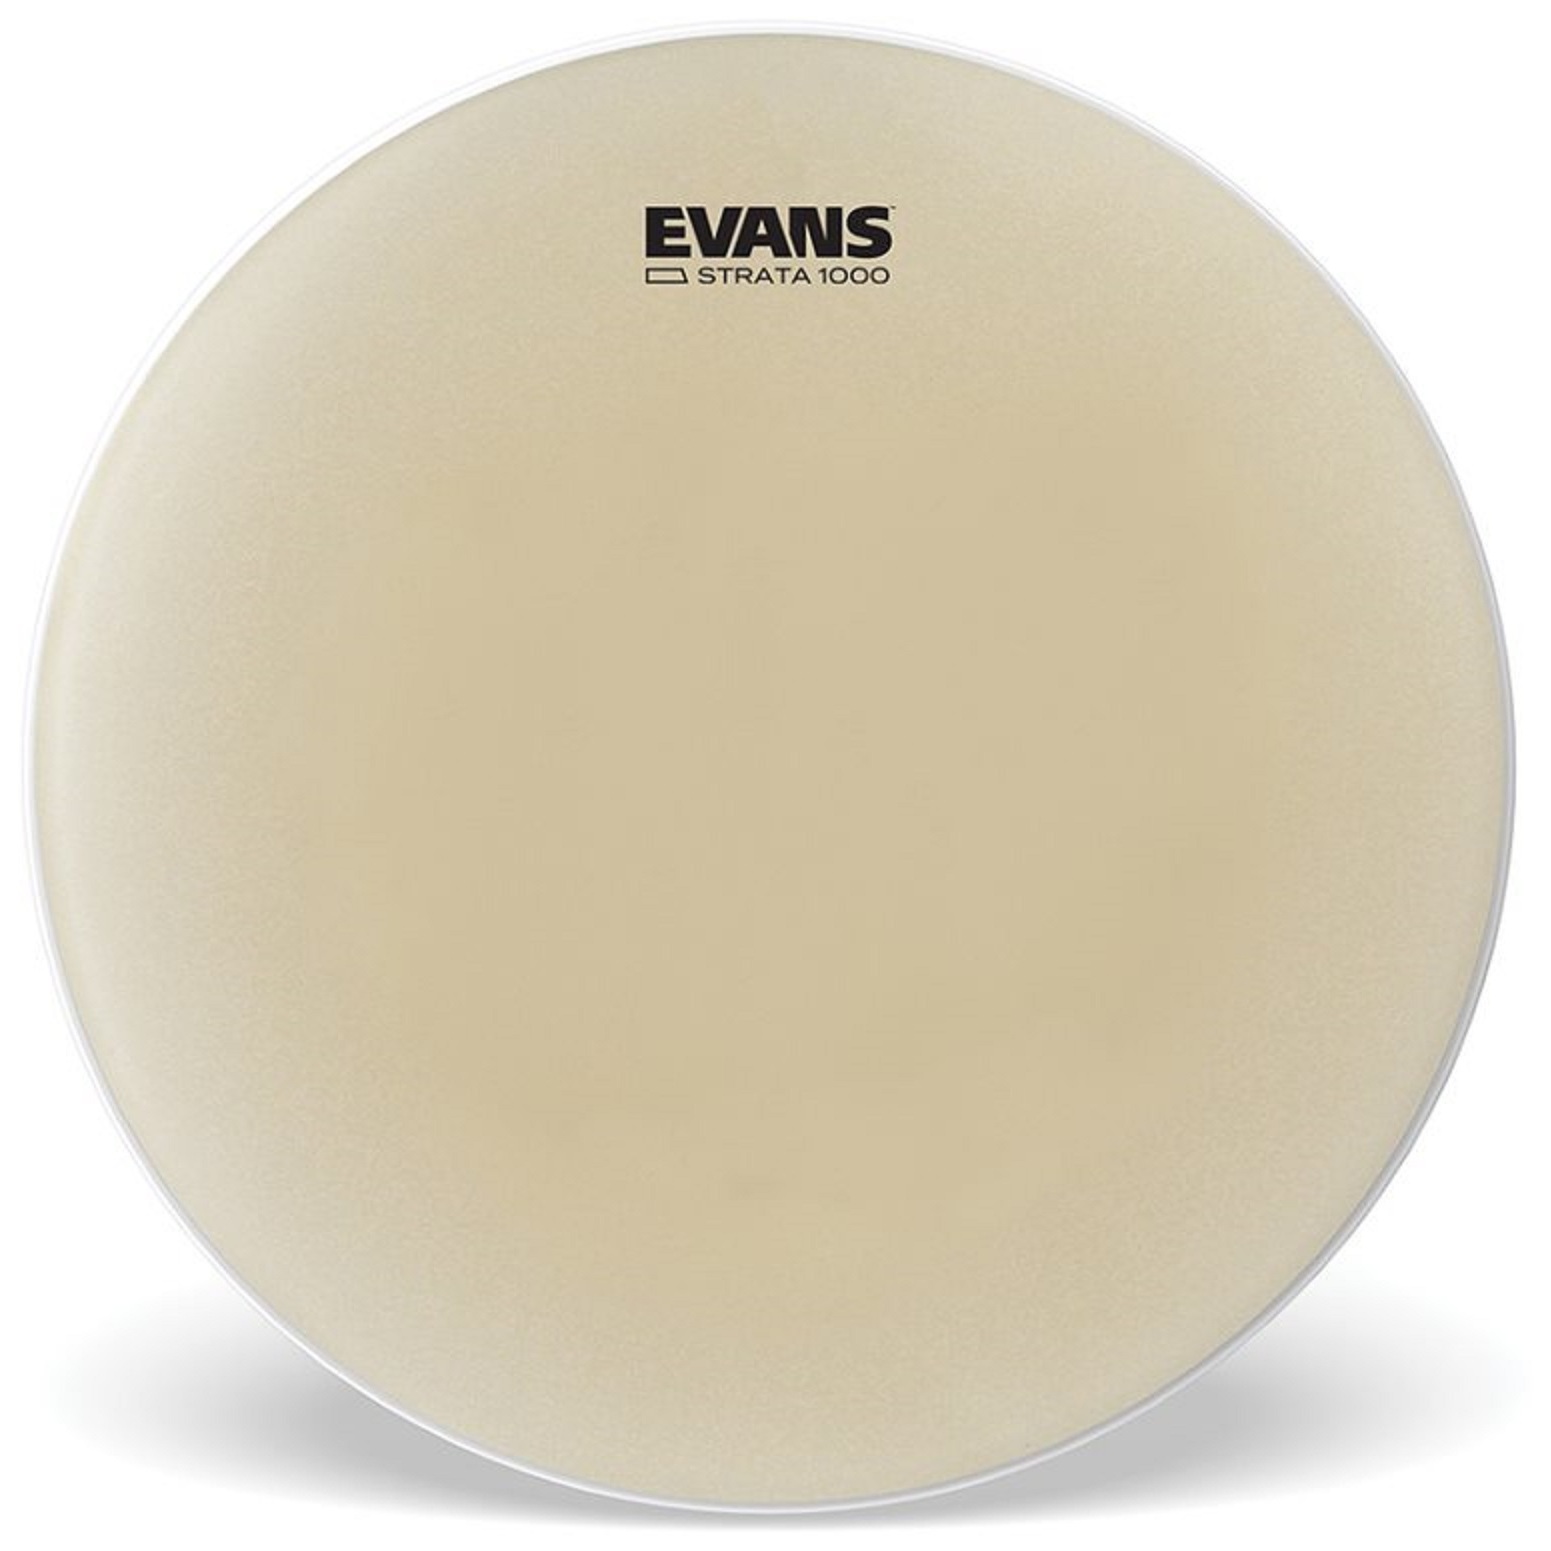 Evans CT12S - Strata 1000 Concert Drum Head, 12 Zoll